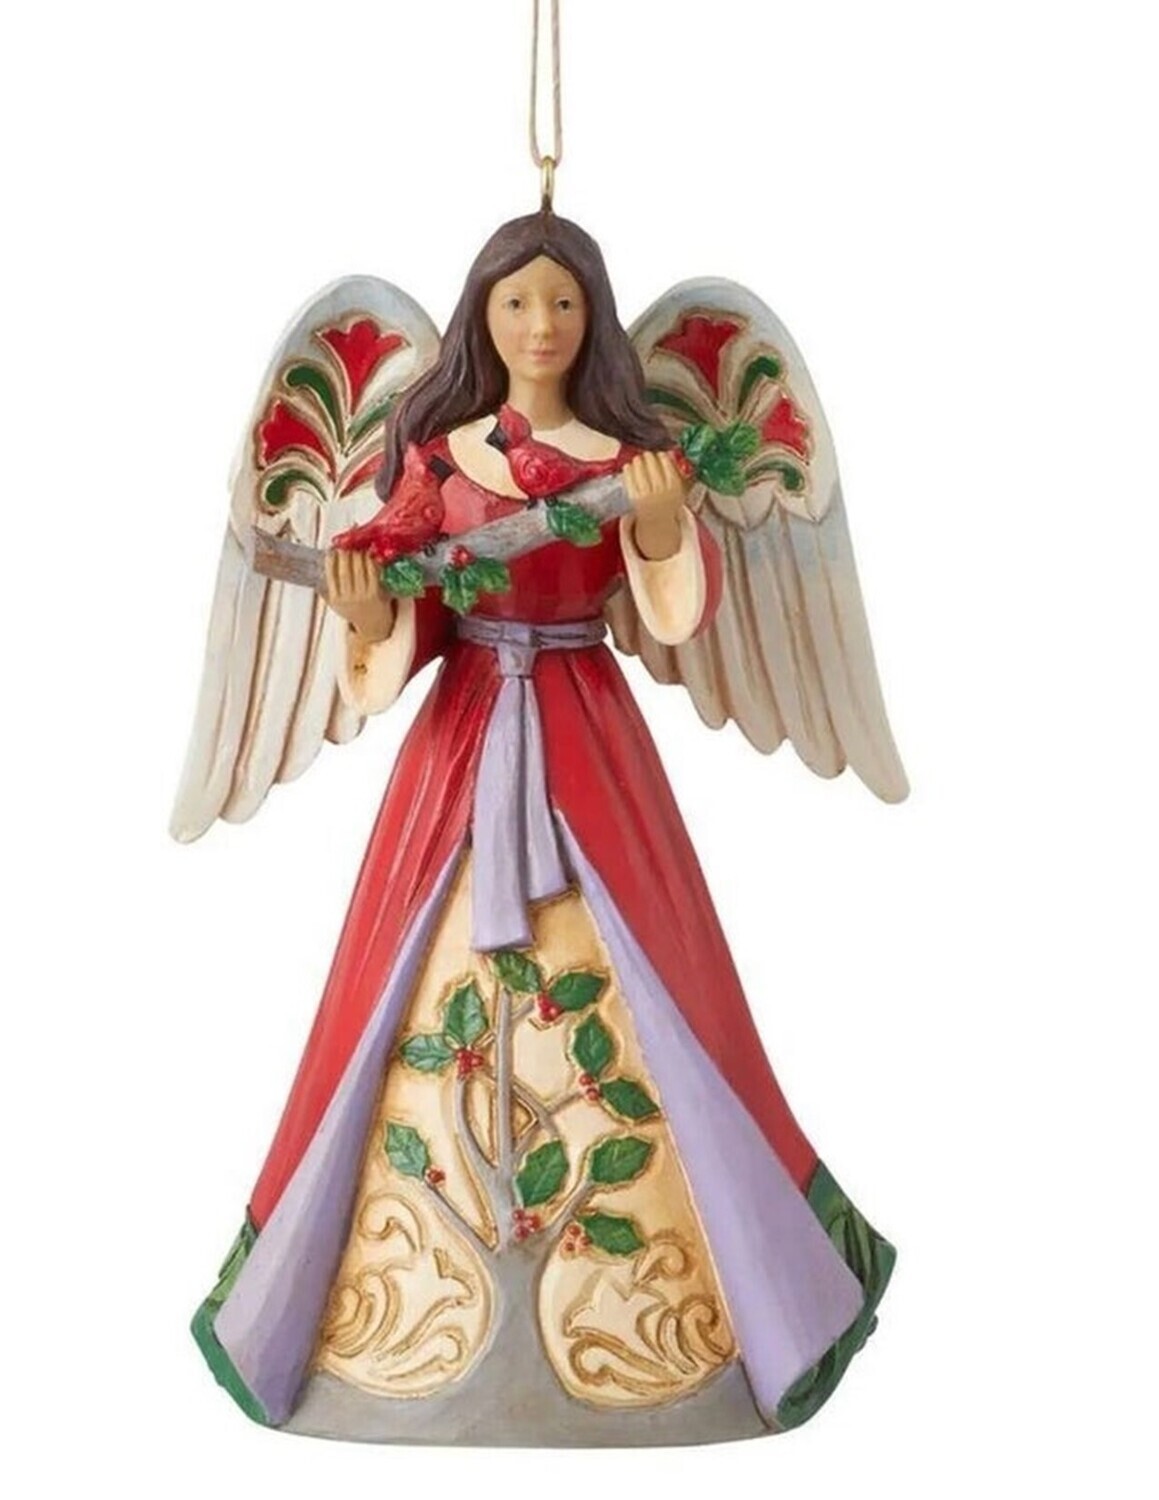 Jim Shore Heartwood Creek "Christmas Angel with Cardinals" Ornament (6011674)